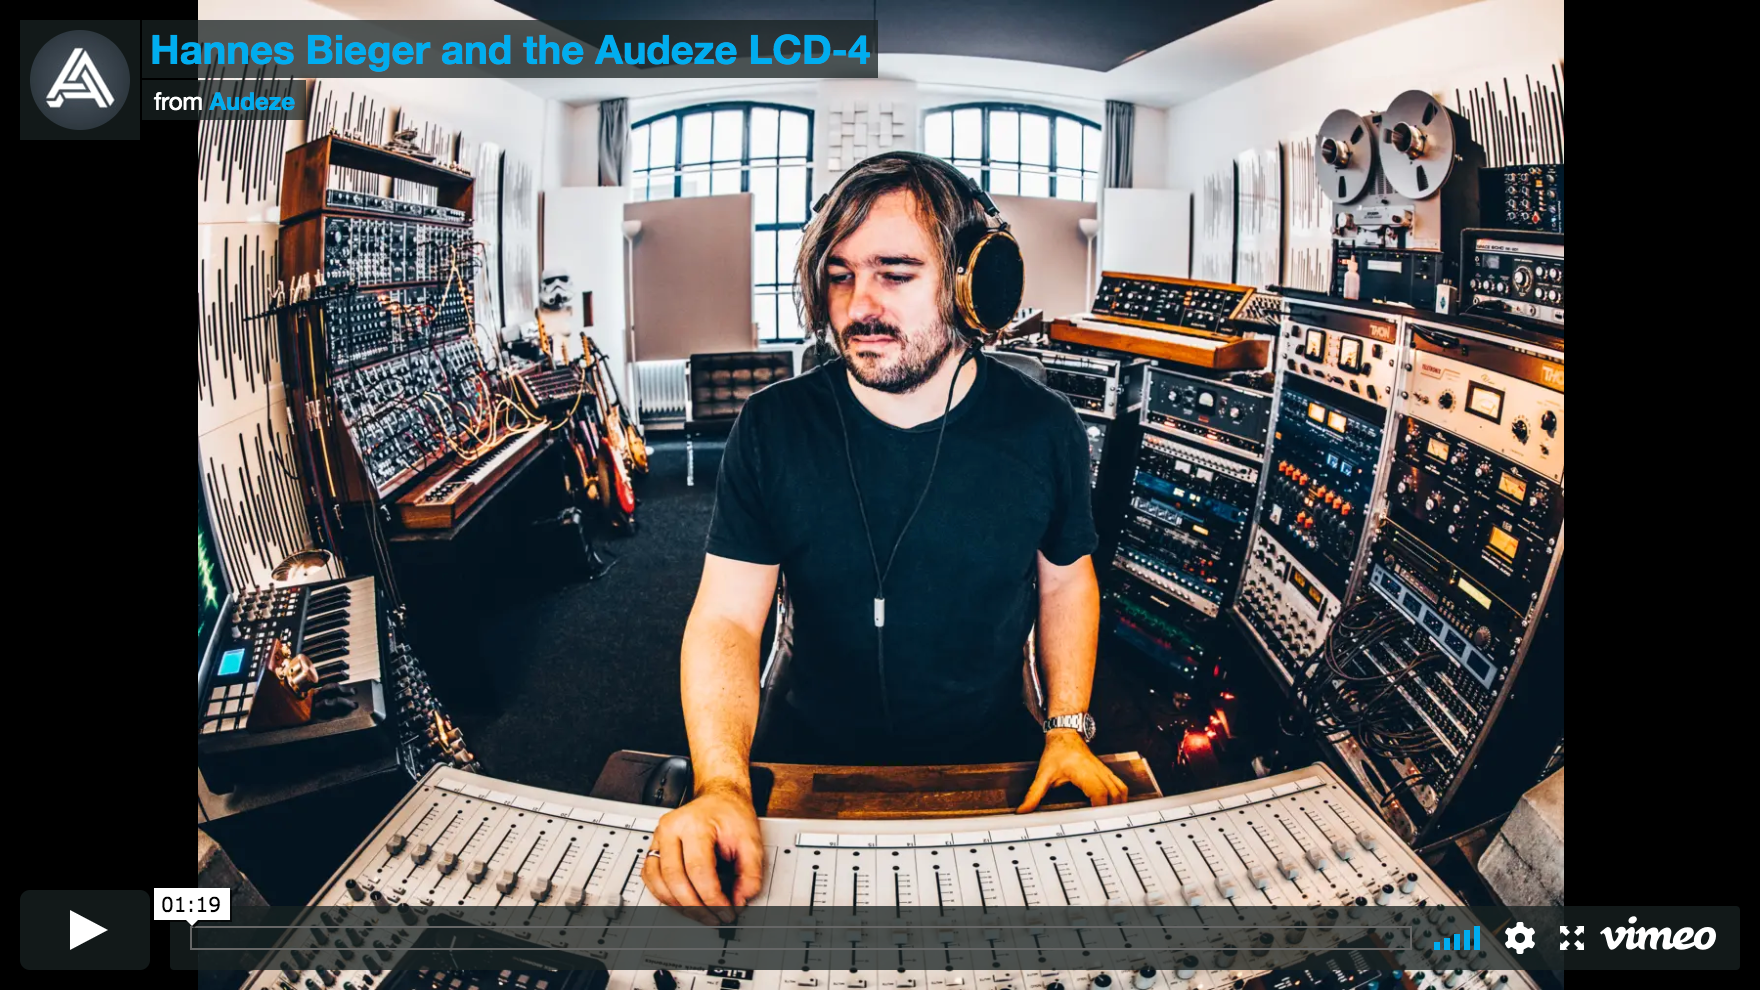 Hannes Bieger explains how Audeze headphones changed the way he mixes.